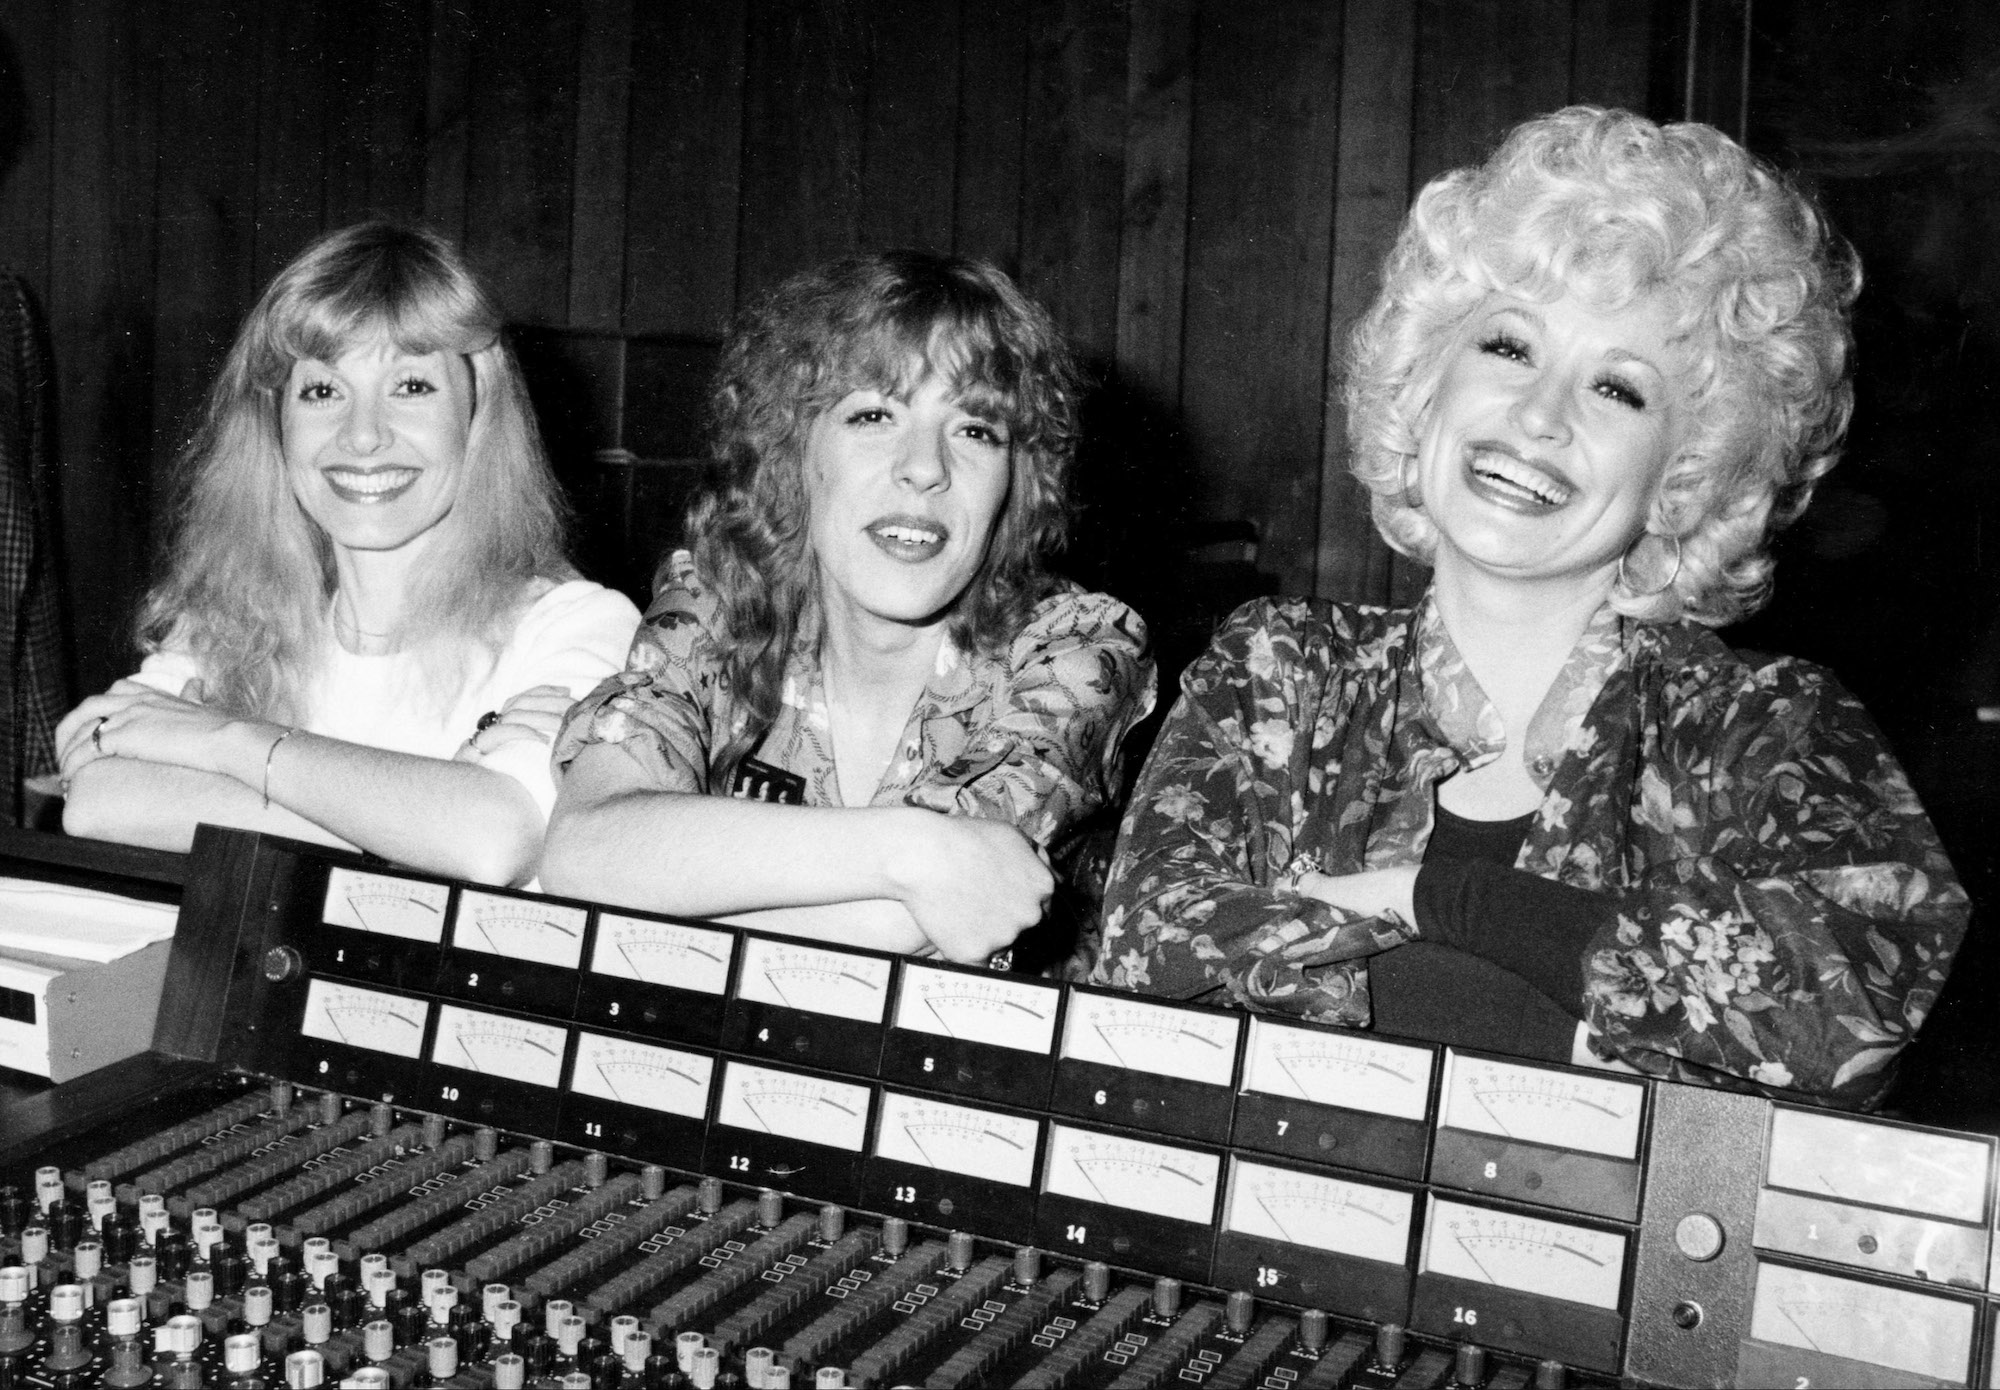 Stella Parton, Freida Parton, and Dolly Parton in a recording studio in 1981